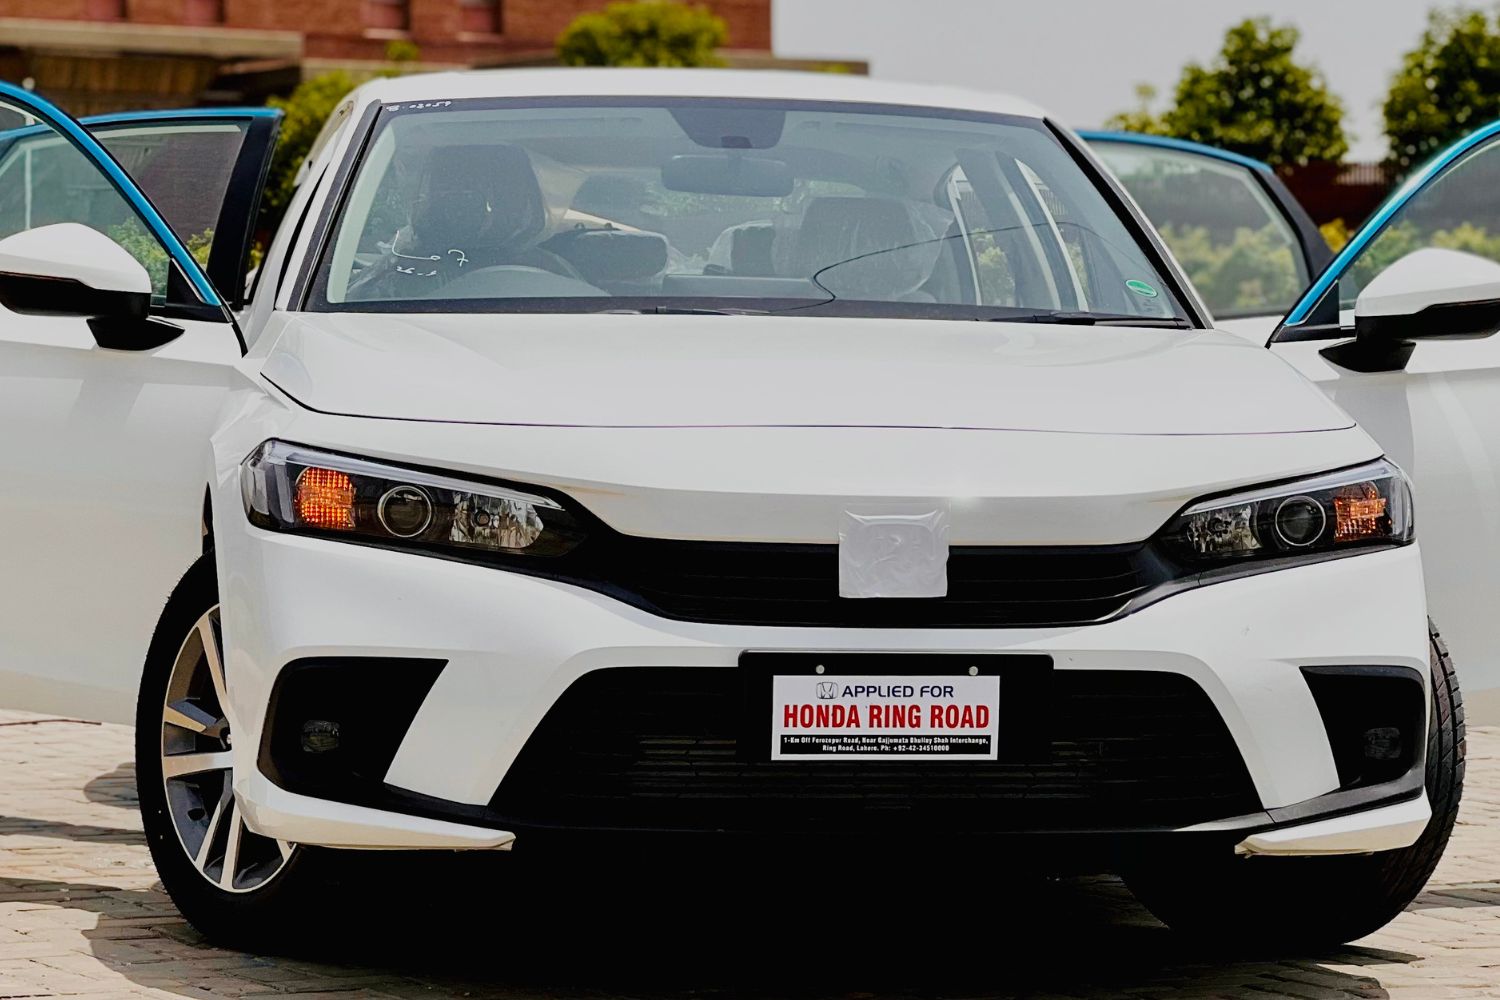 Honda introduced the City hatchback